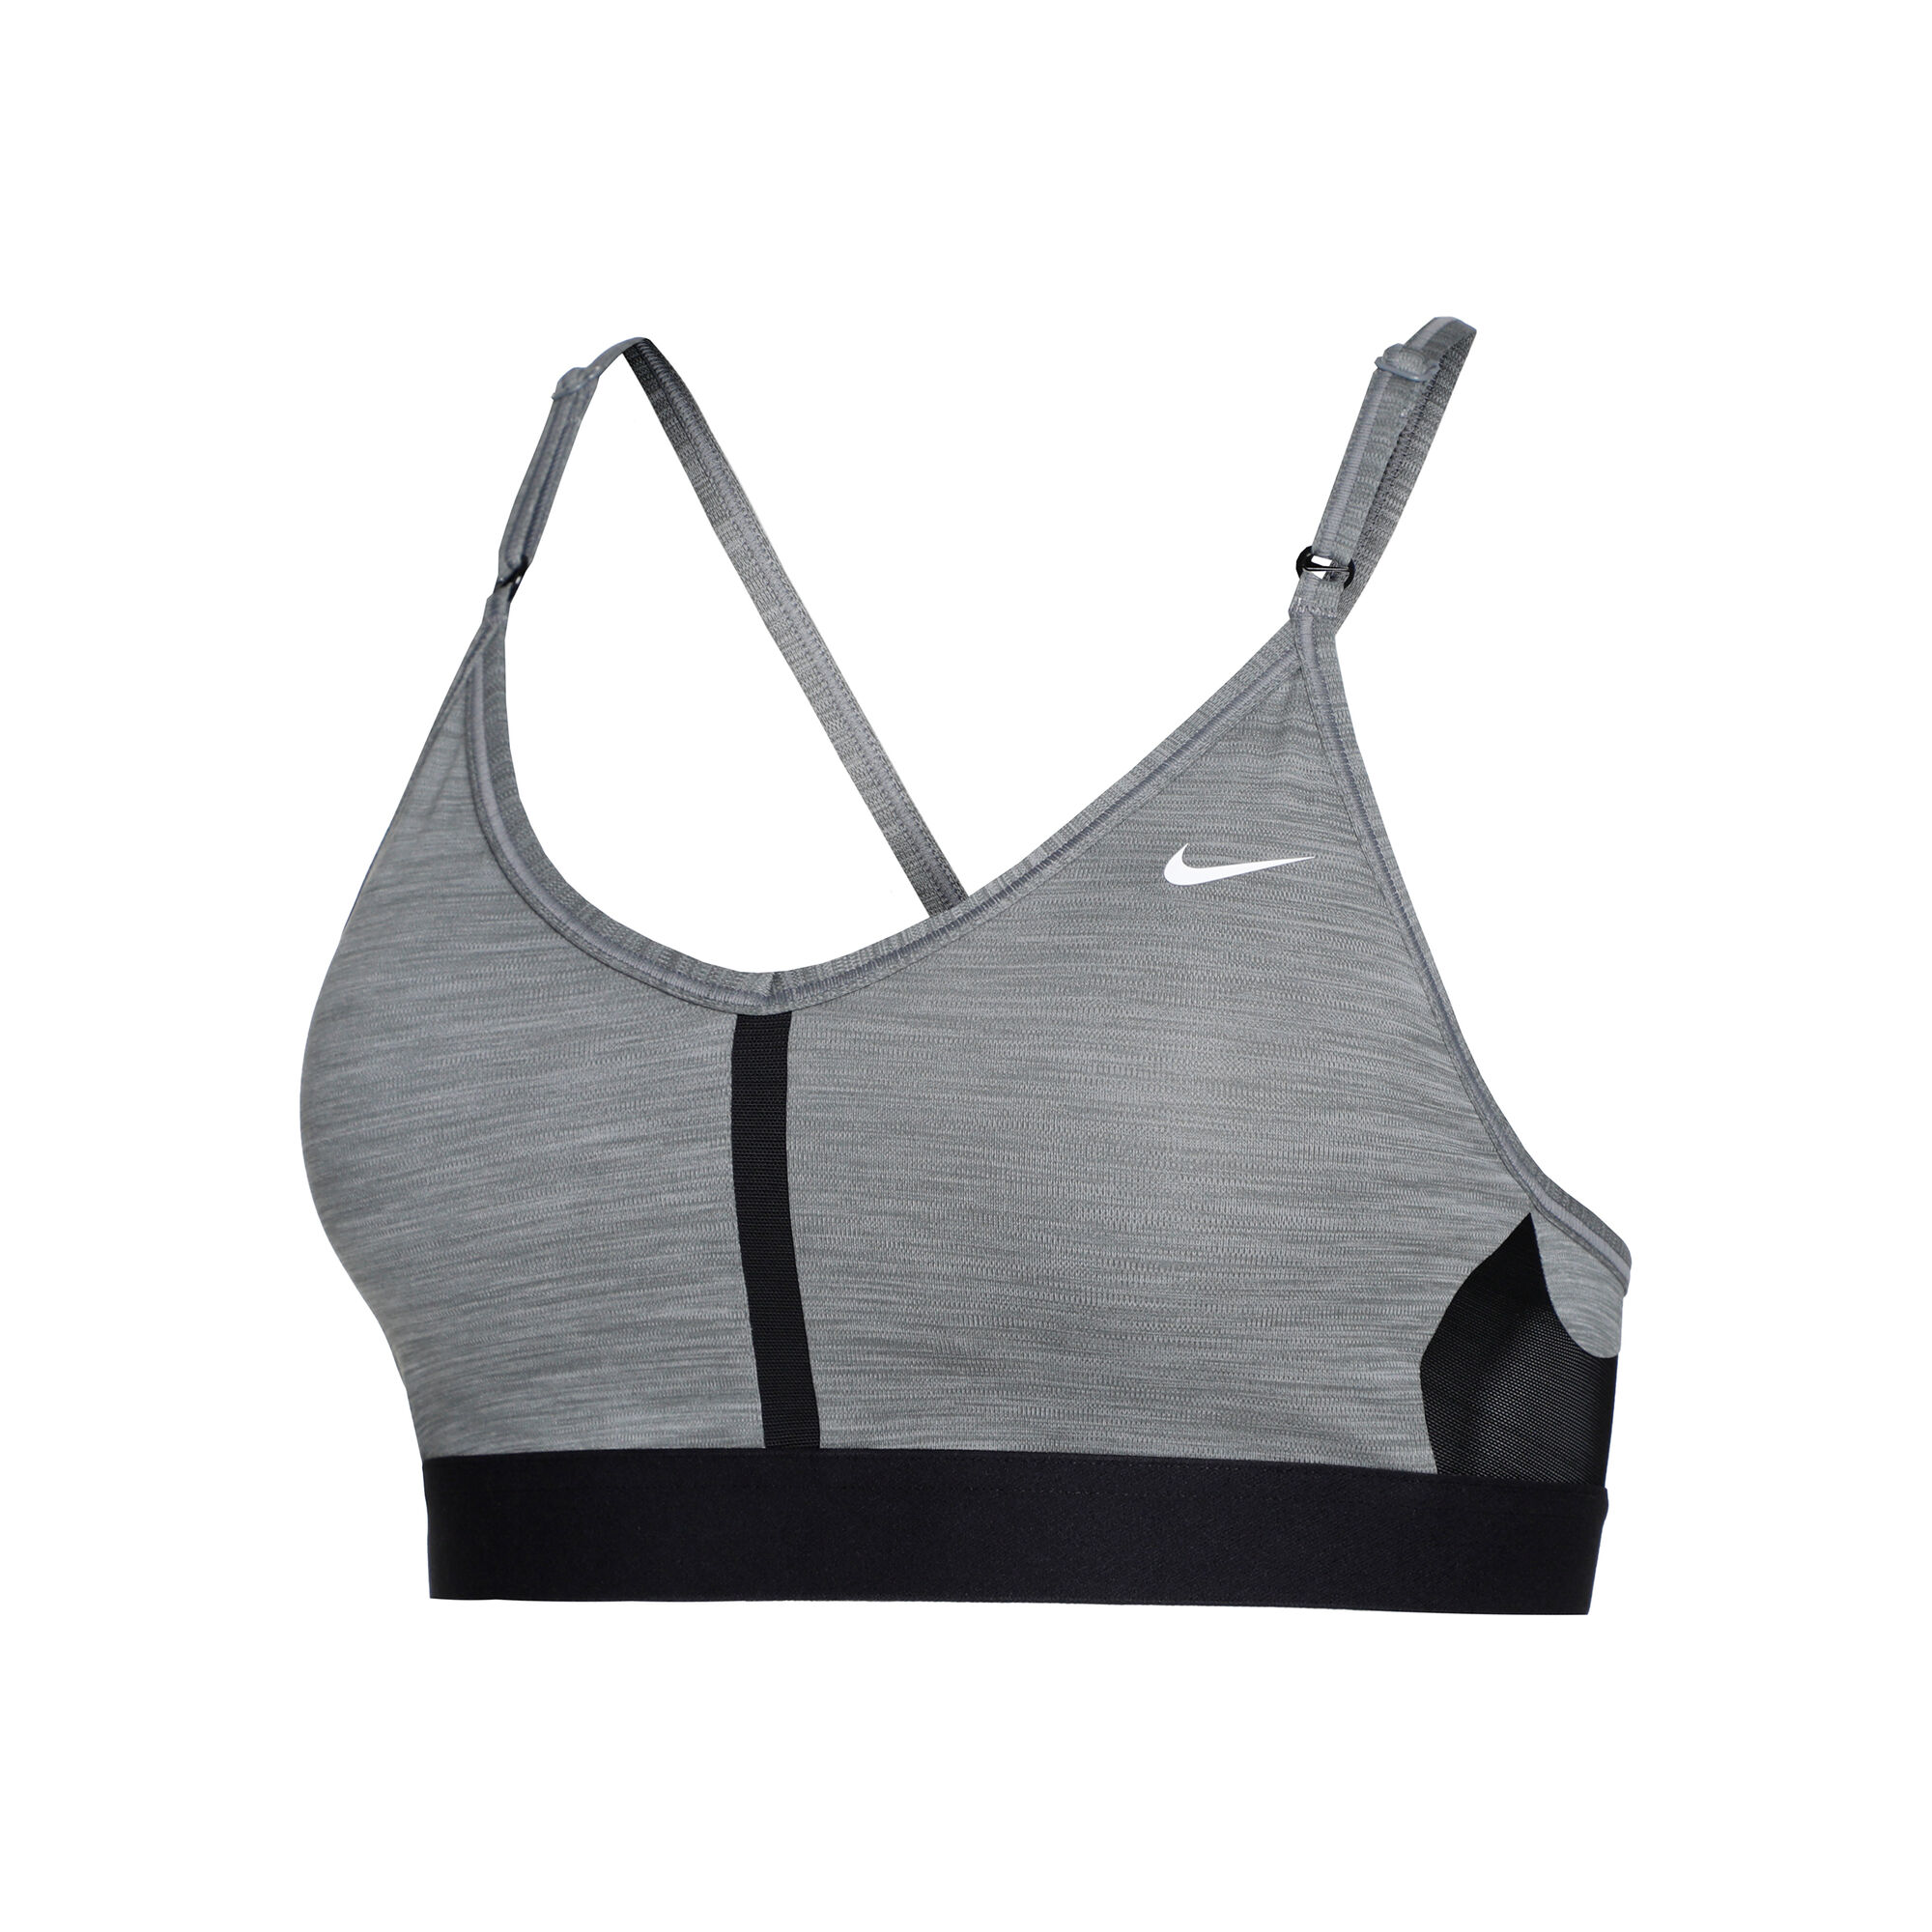 Buy Nike Indy Light Support Sports Bras Women Grey, Black online